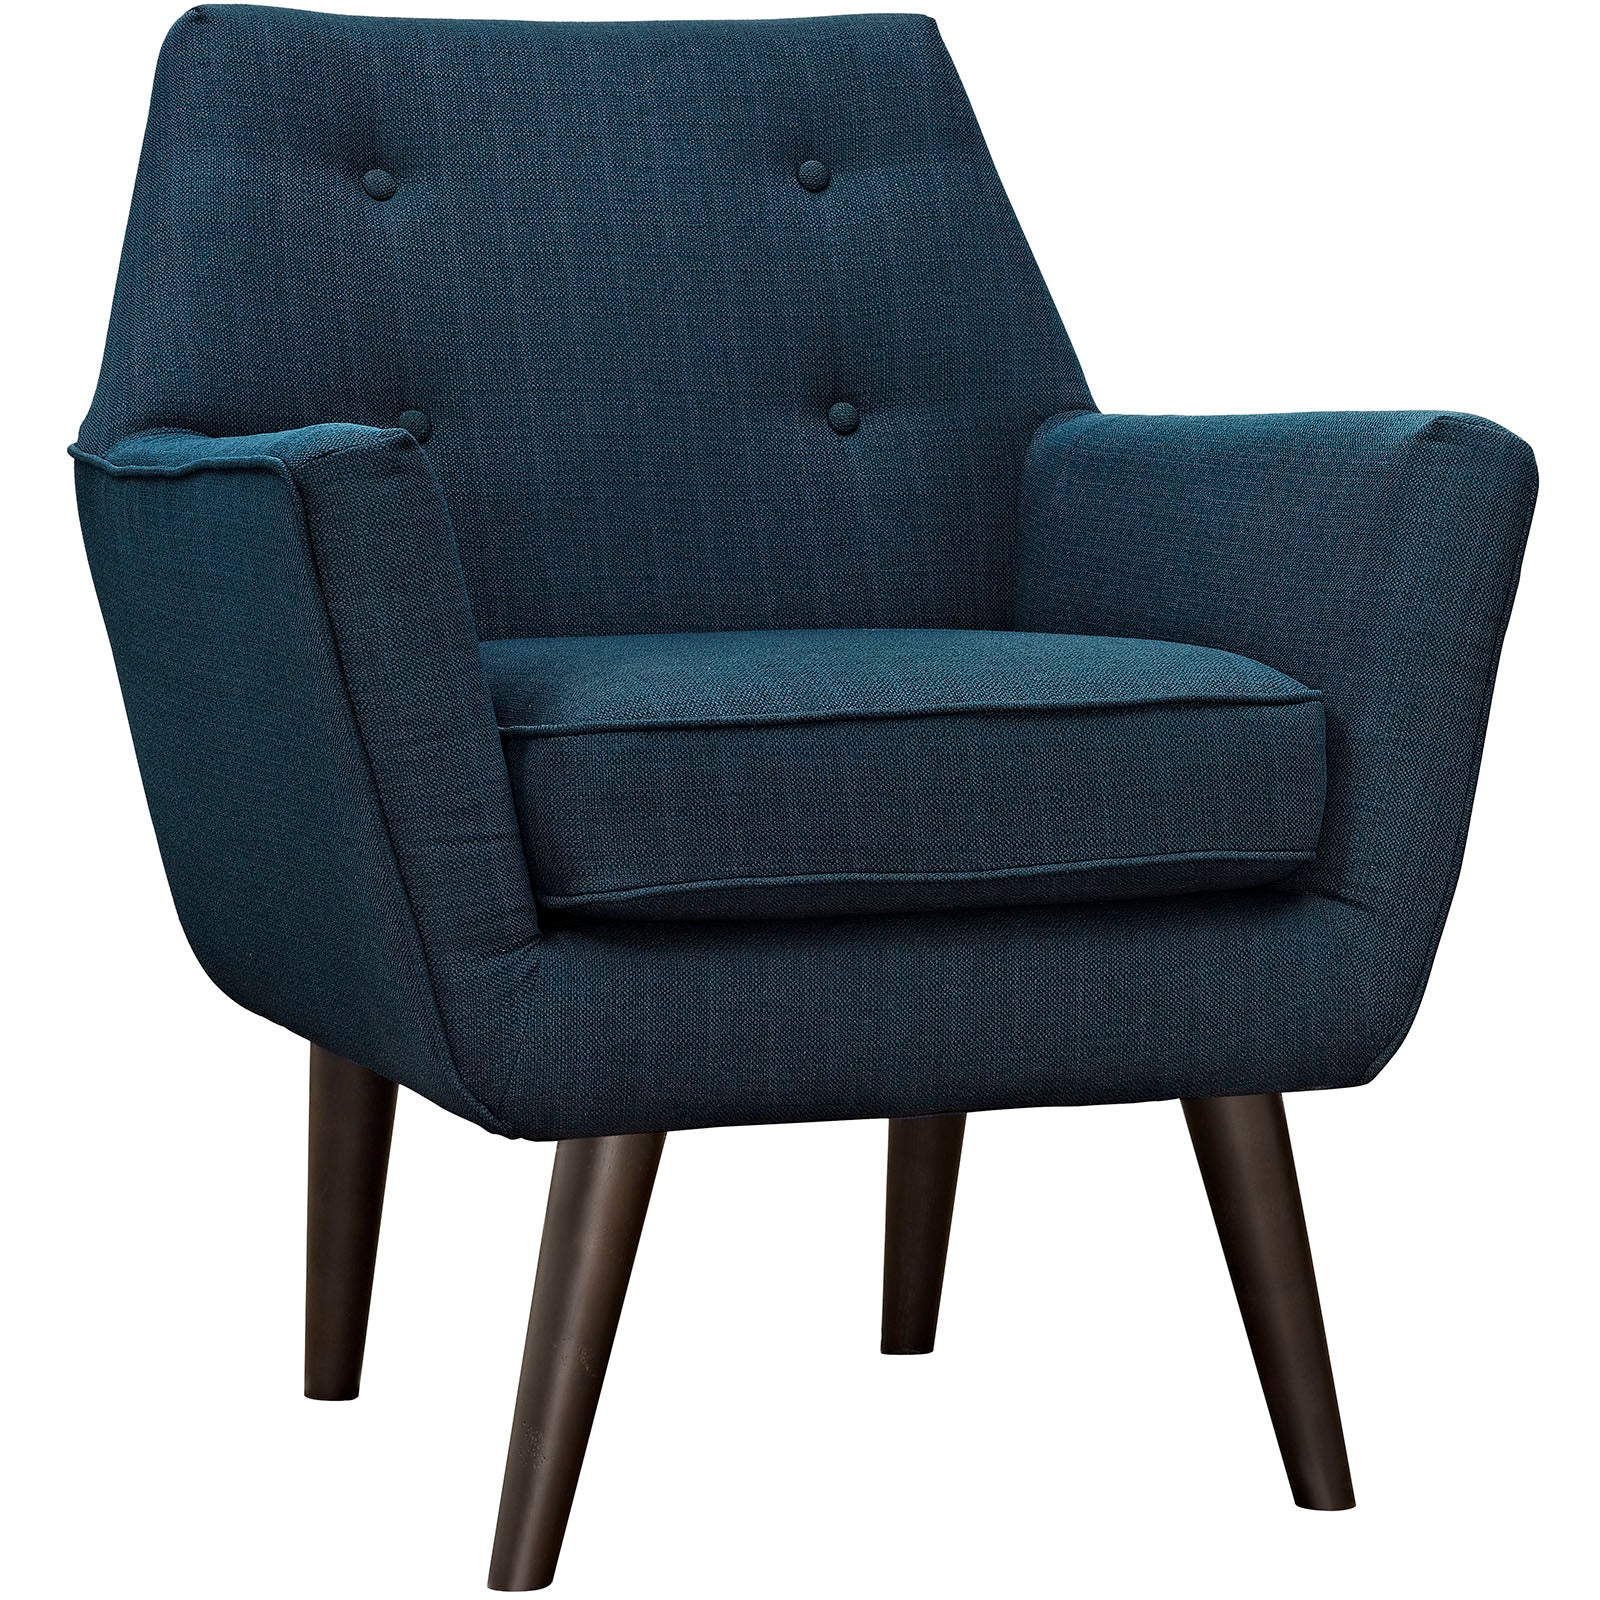 Posit Upholstered Fabric Armchair - East Shore Modern Home Furnishings